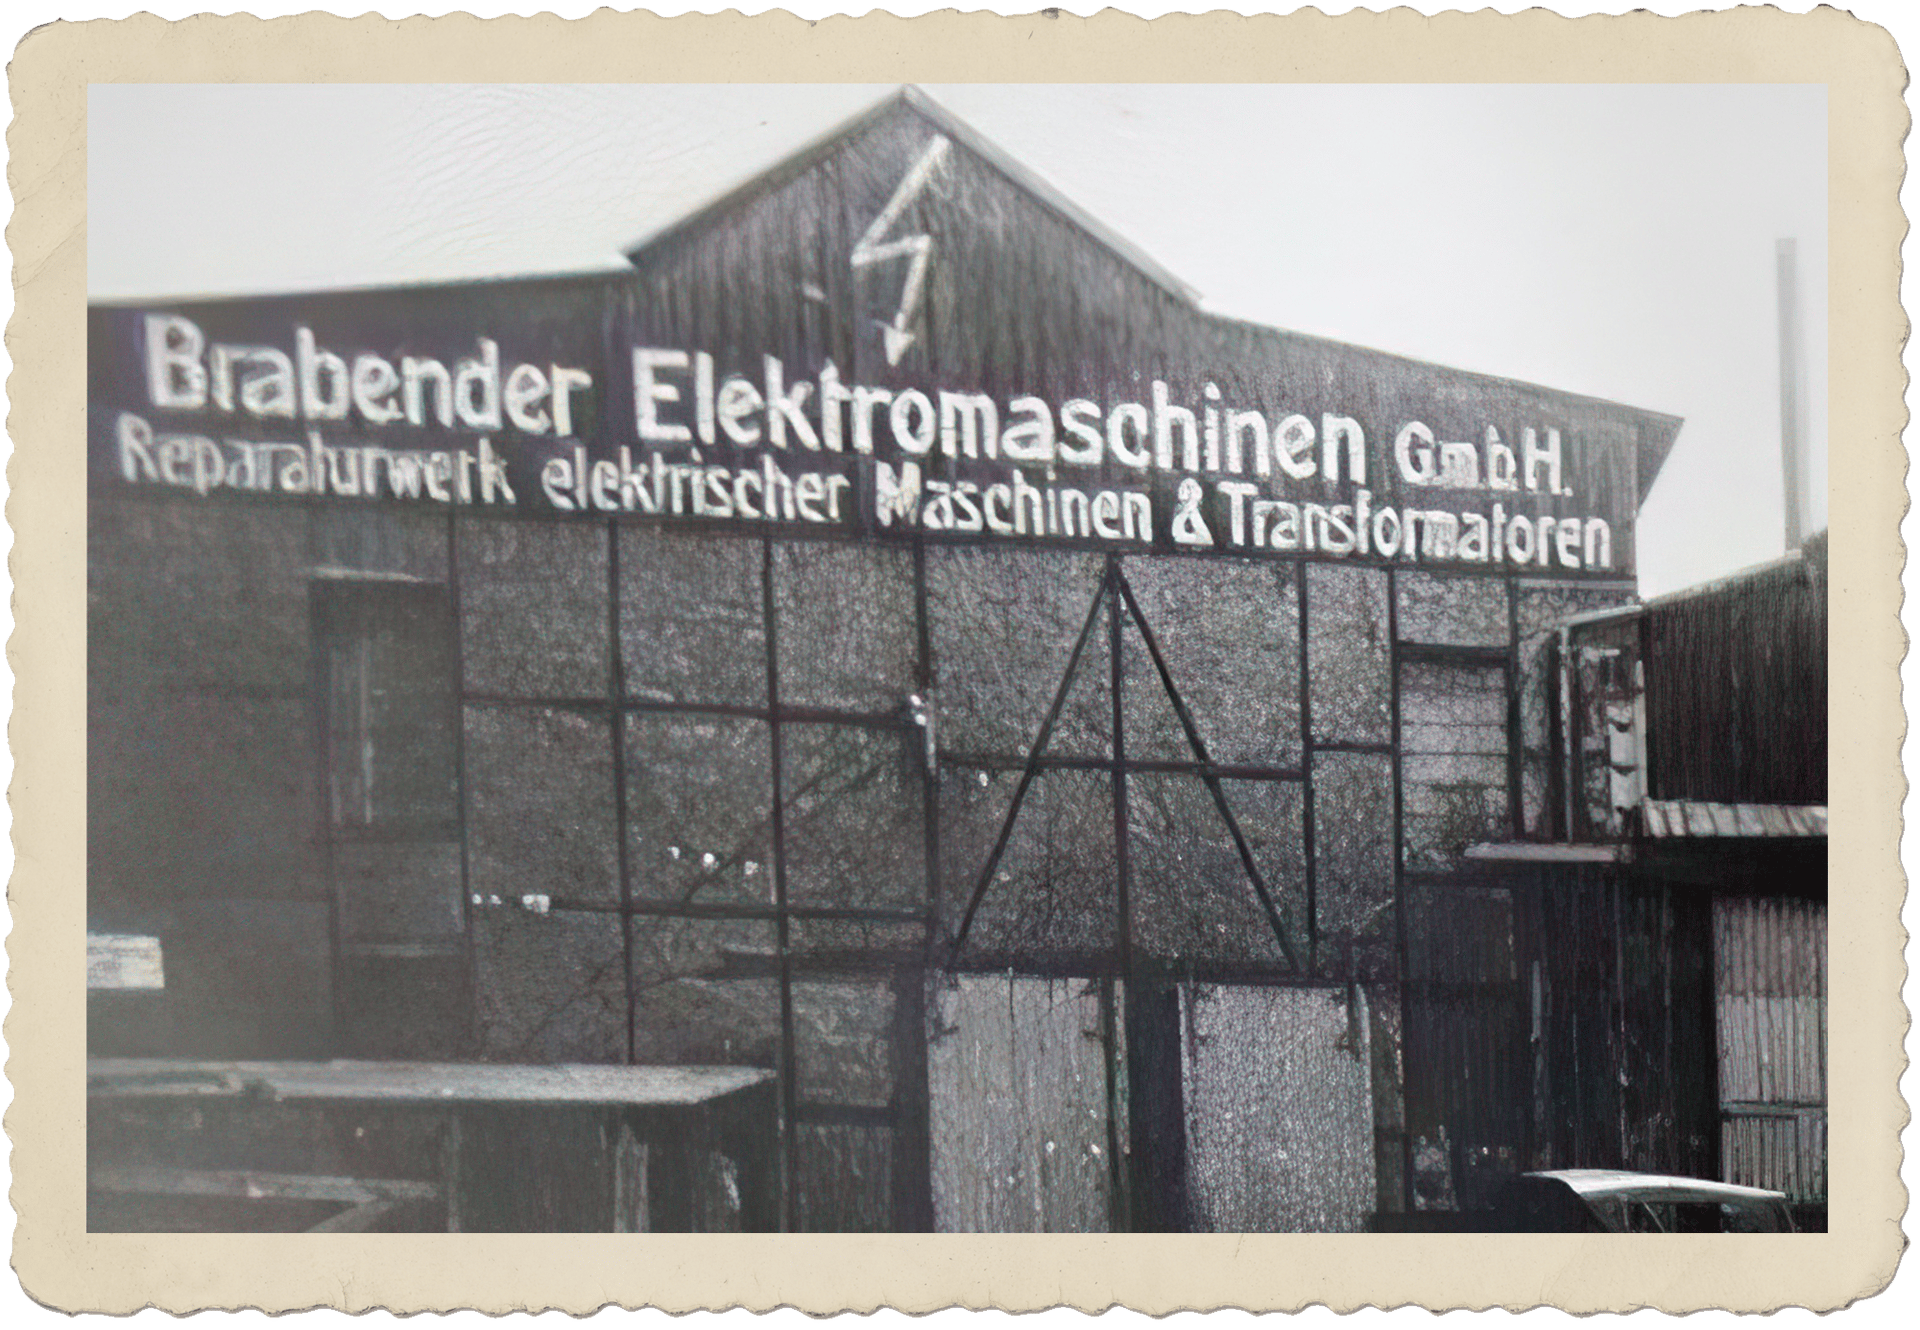 1923 Brabender Elektromaschinen